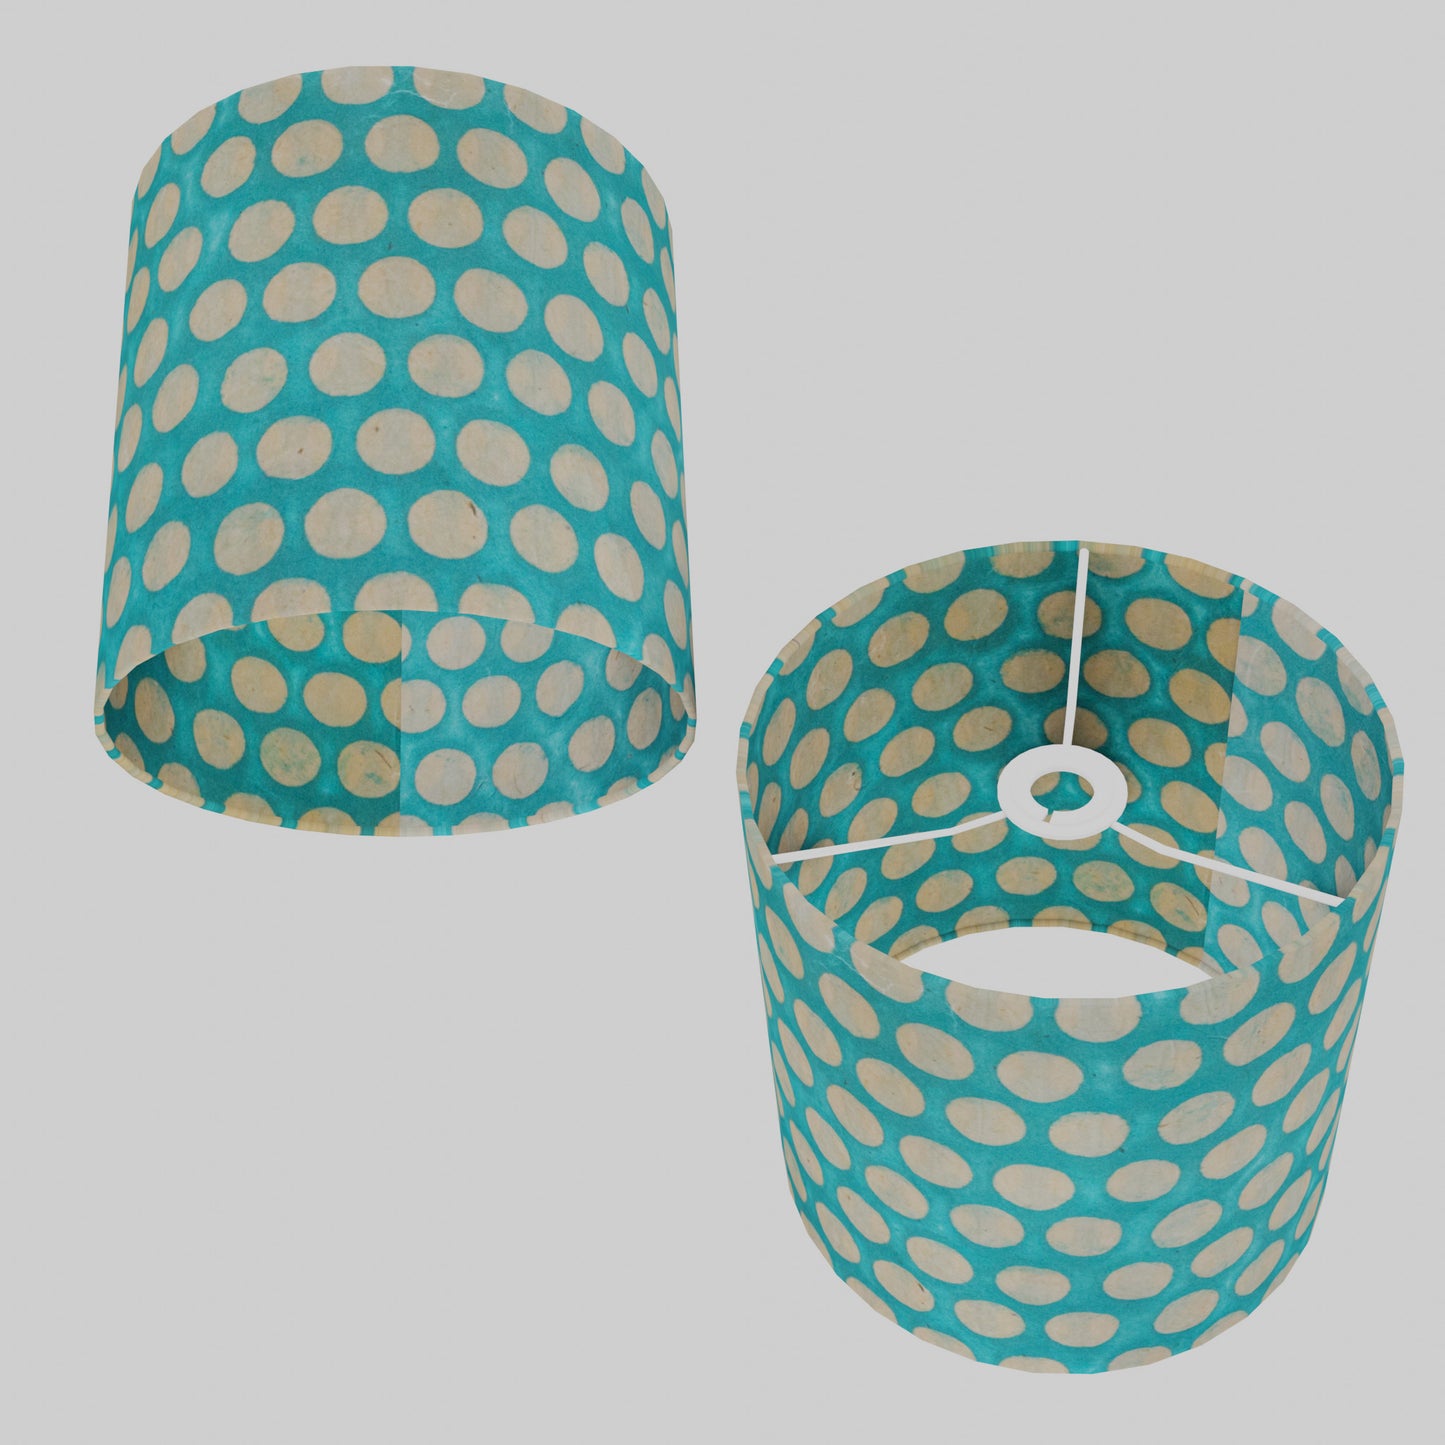 Drum Lamp Shade - P97 - Batik Dots on Cyan, 25cm x 25cm